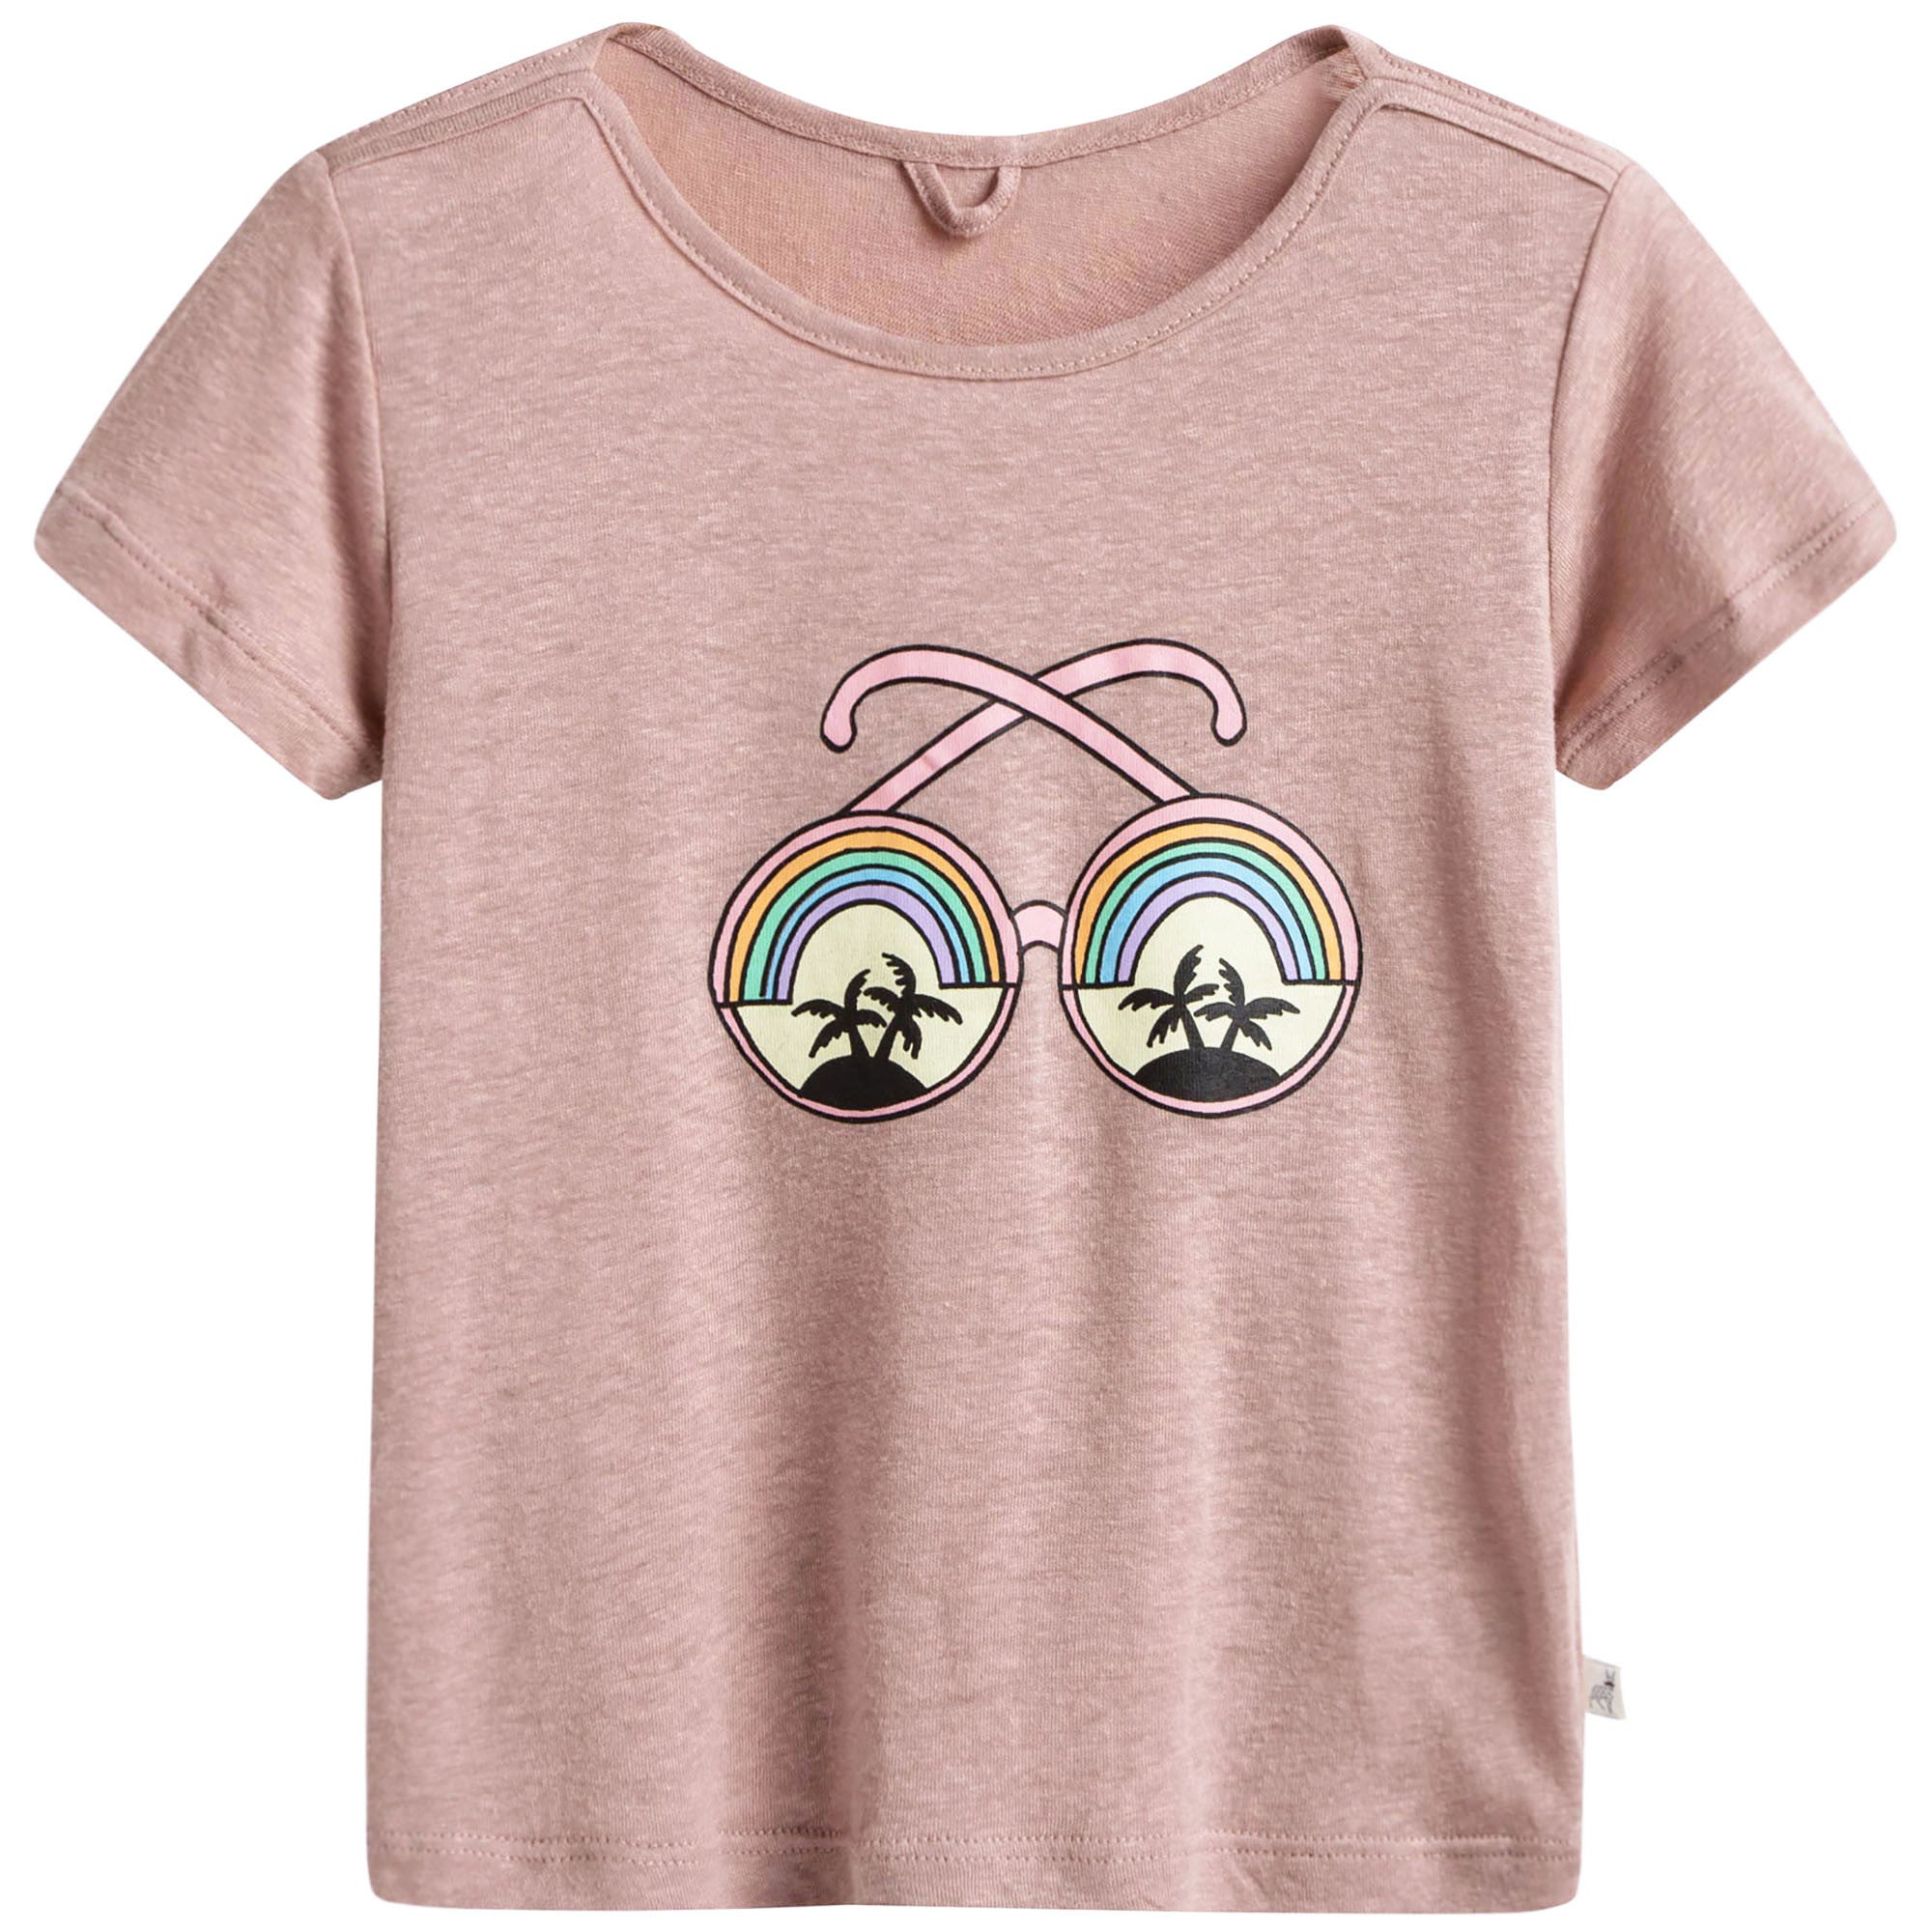 Girls Pink Sunglasses Print Chuckle T-shirt